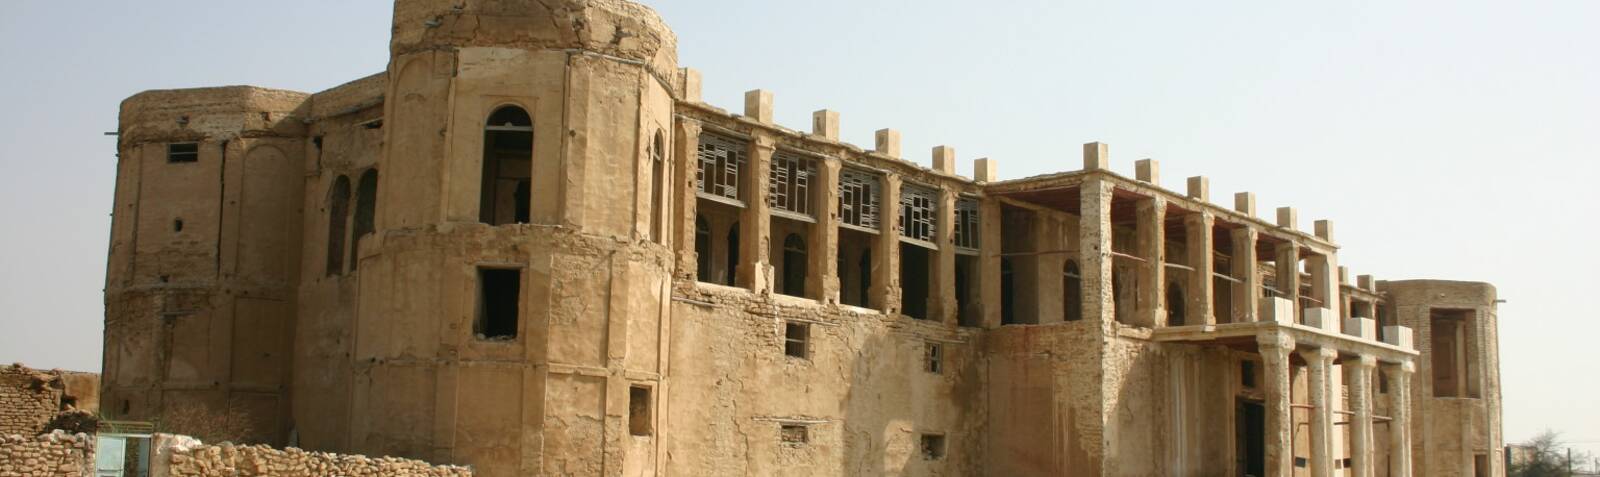 Bushehr Historical Area 